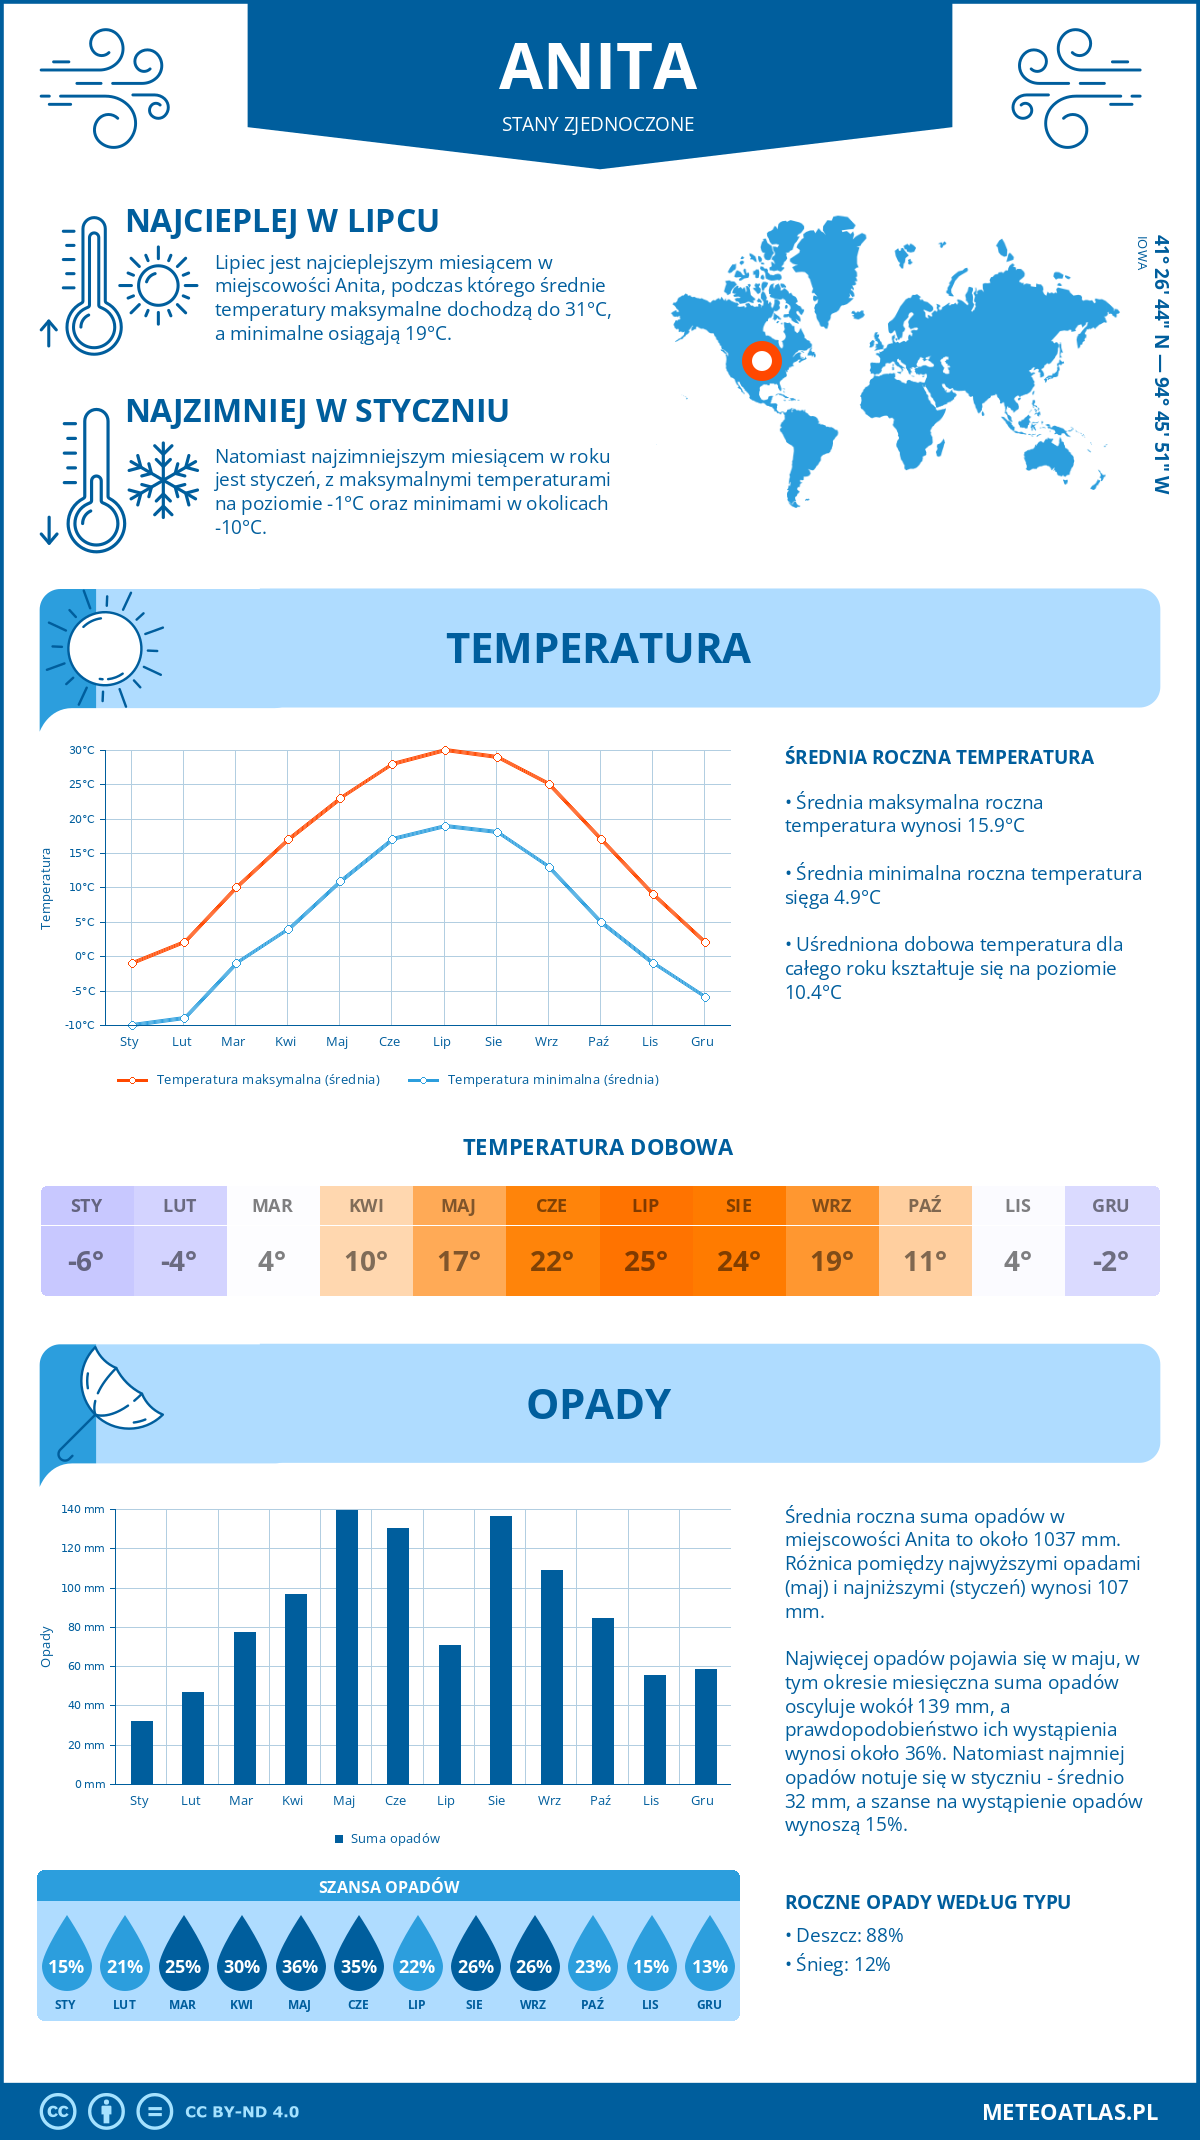 Pogoda Anita (Stany Zjednoczone). Temperatura oraz opady.